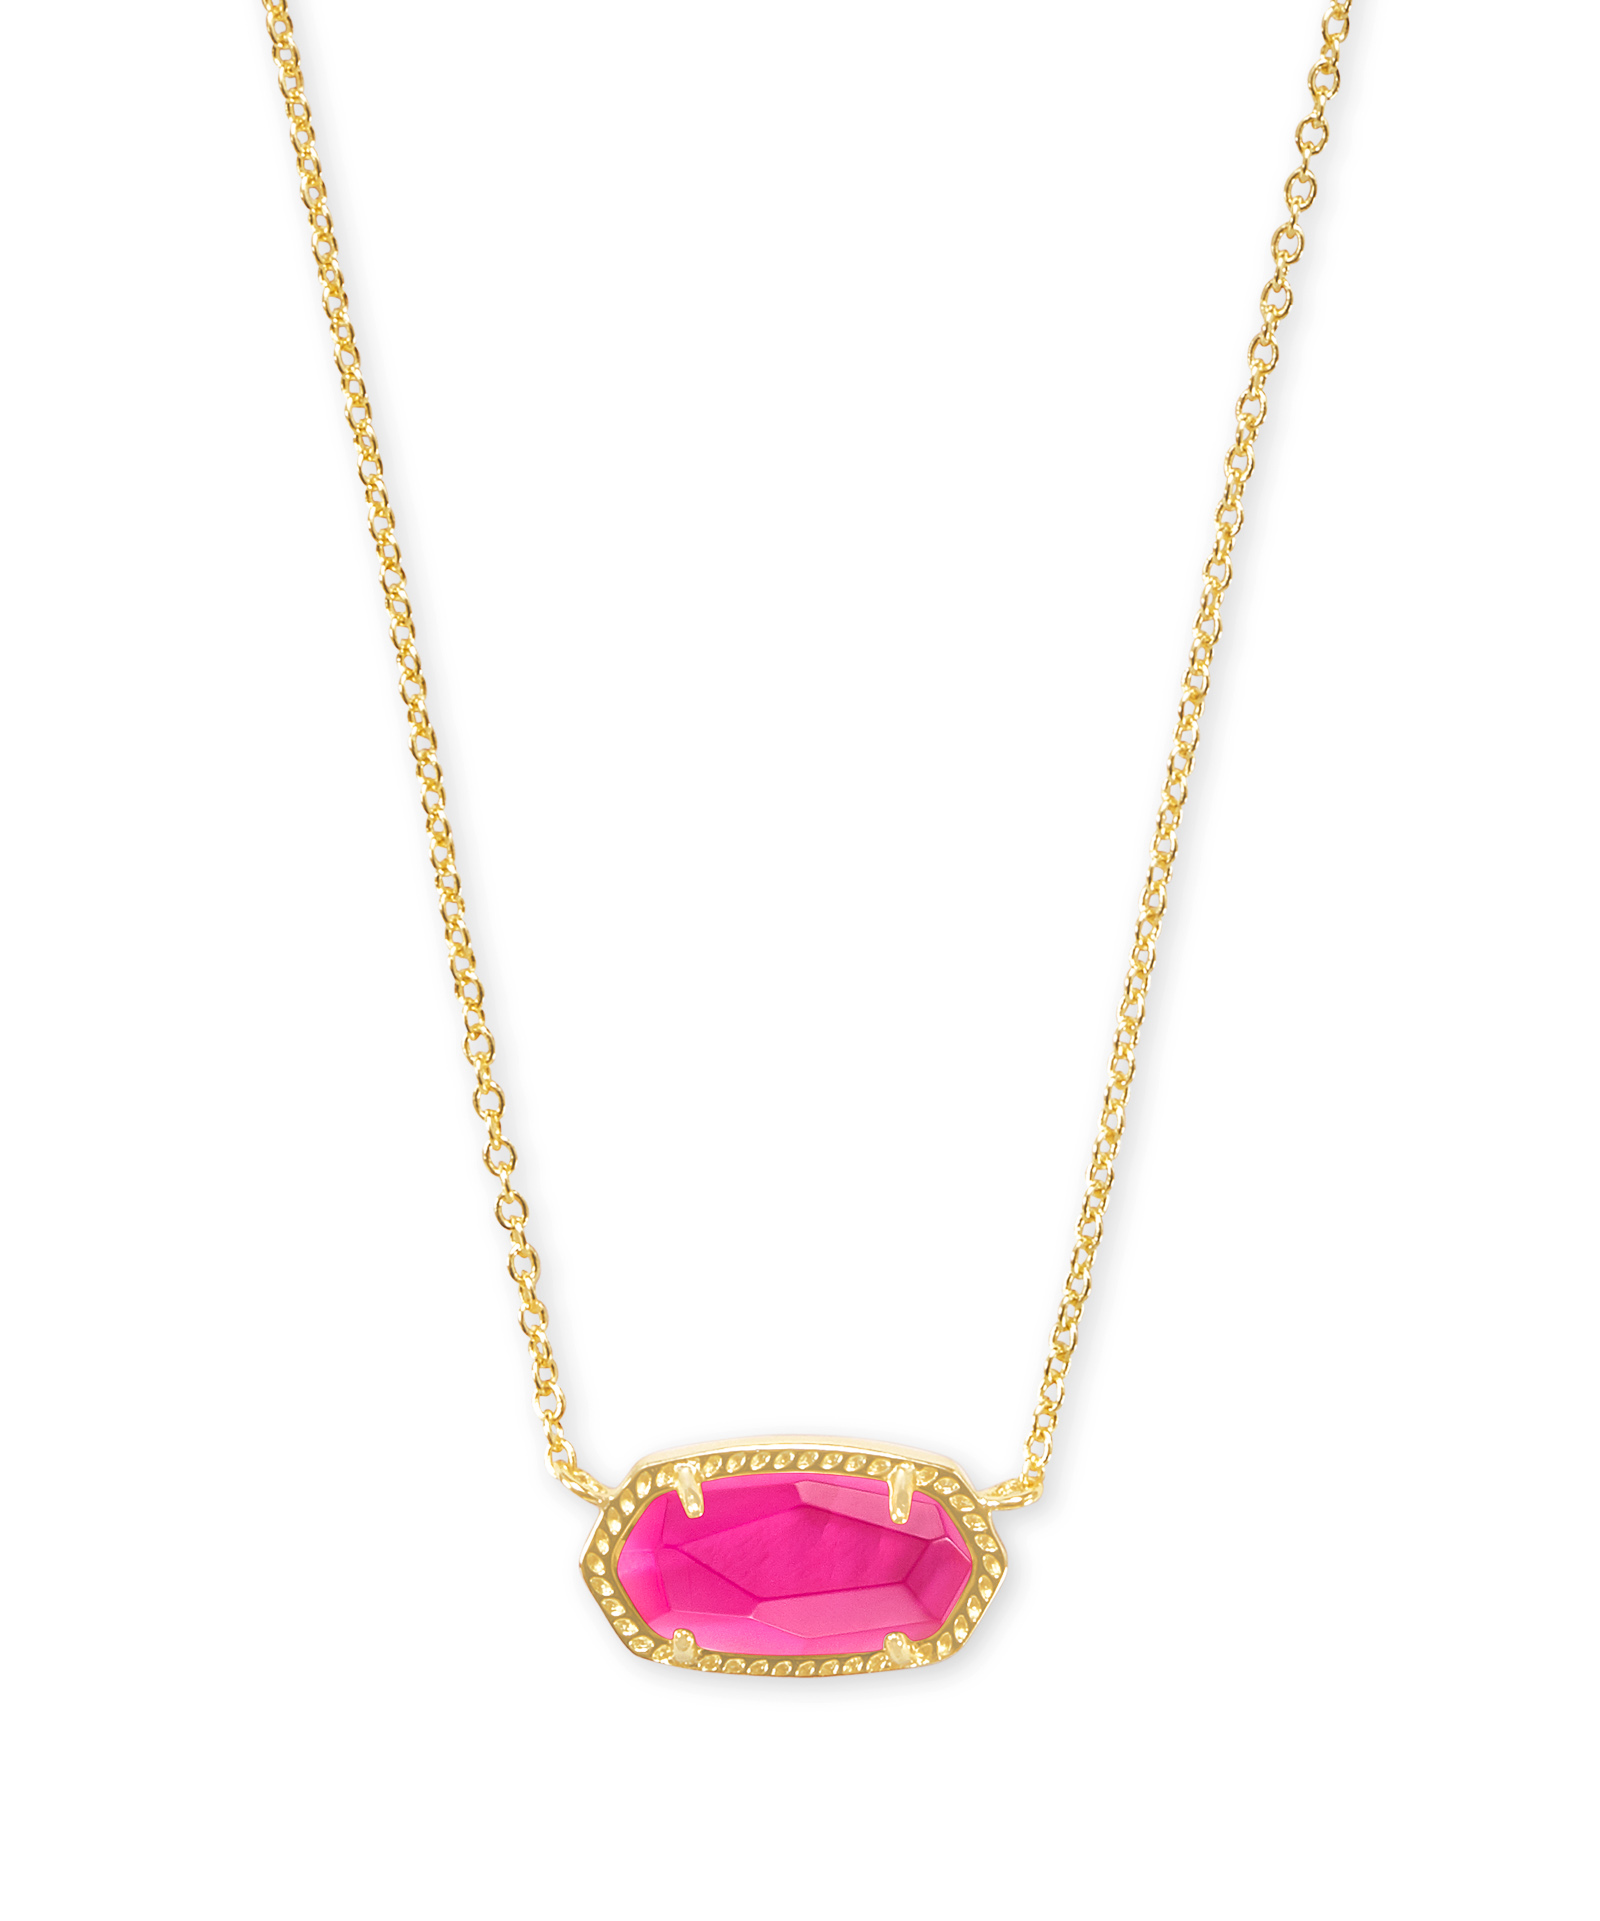 Kendra+Scott+Azalea+Illusion+Pink+14k+Gold+Ever+Pendant+Necklace+Jewelry  for sale online | eBay